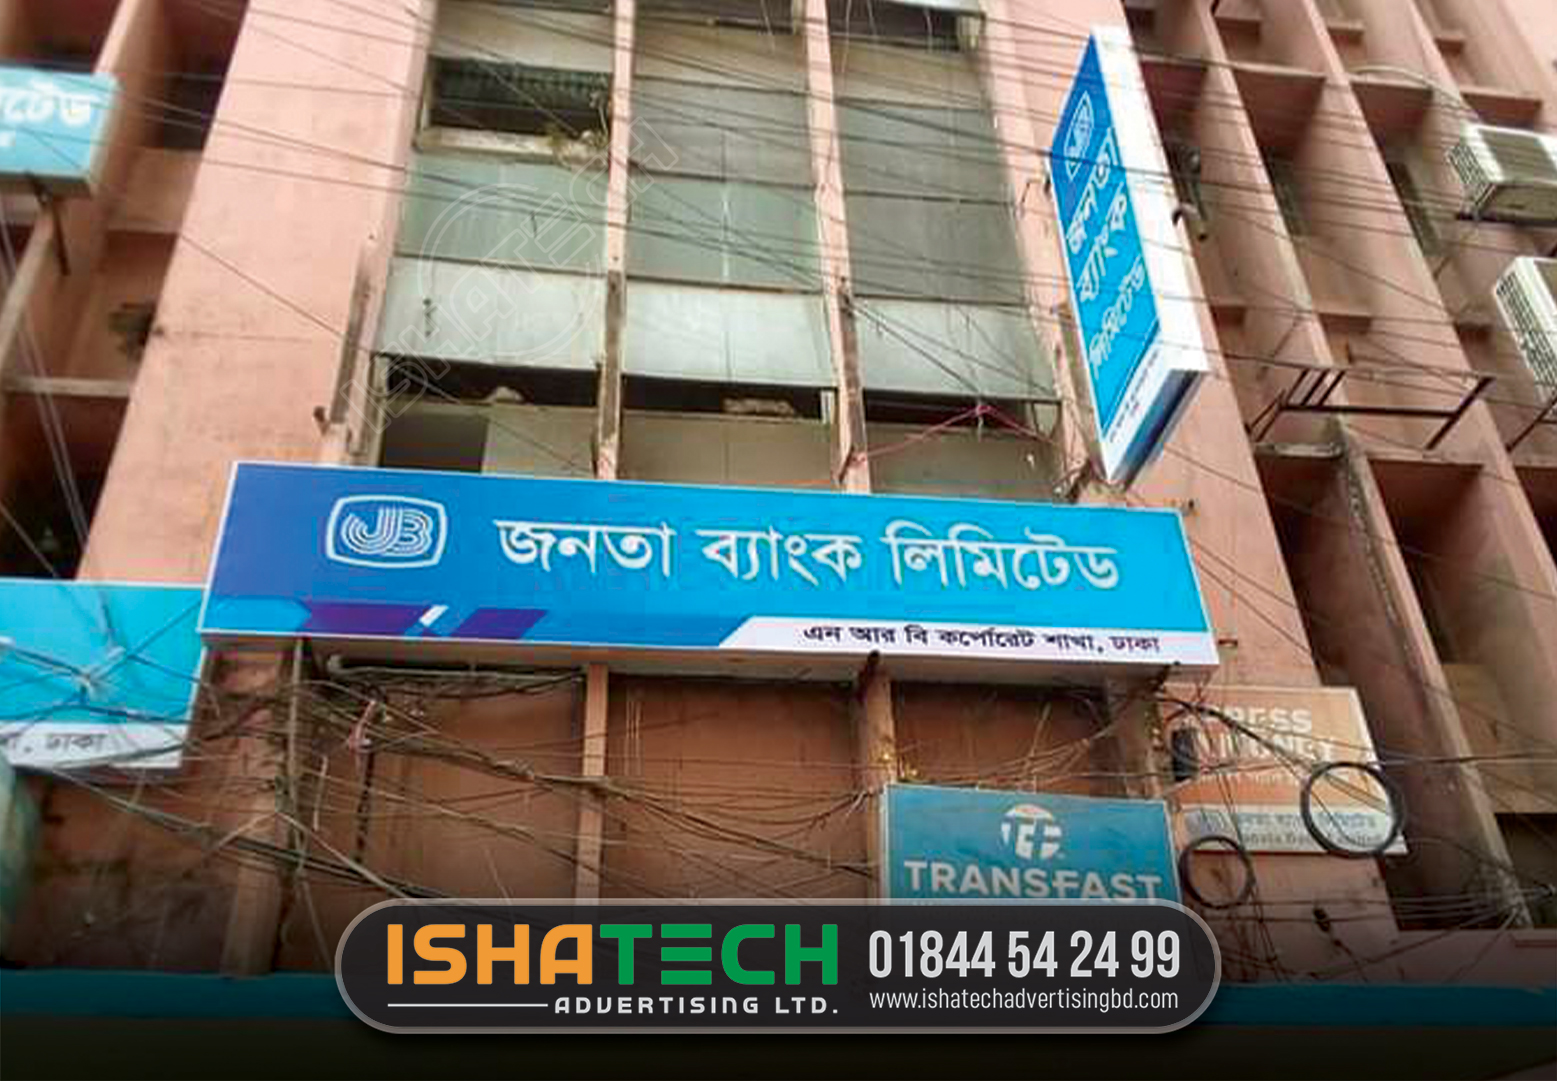 BANK SIGNBOARD AND BILLBOARD MAKER AND SUPPLIER SHOP OR COMPANY IN DHAKA BANGLADESH